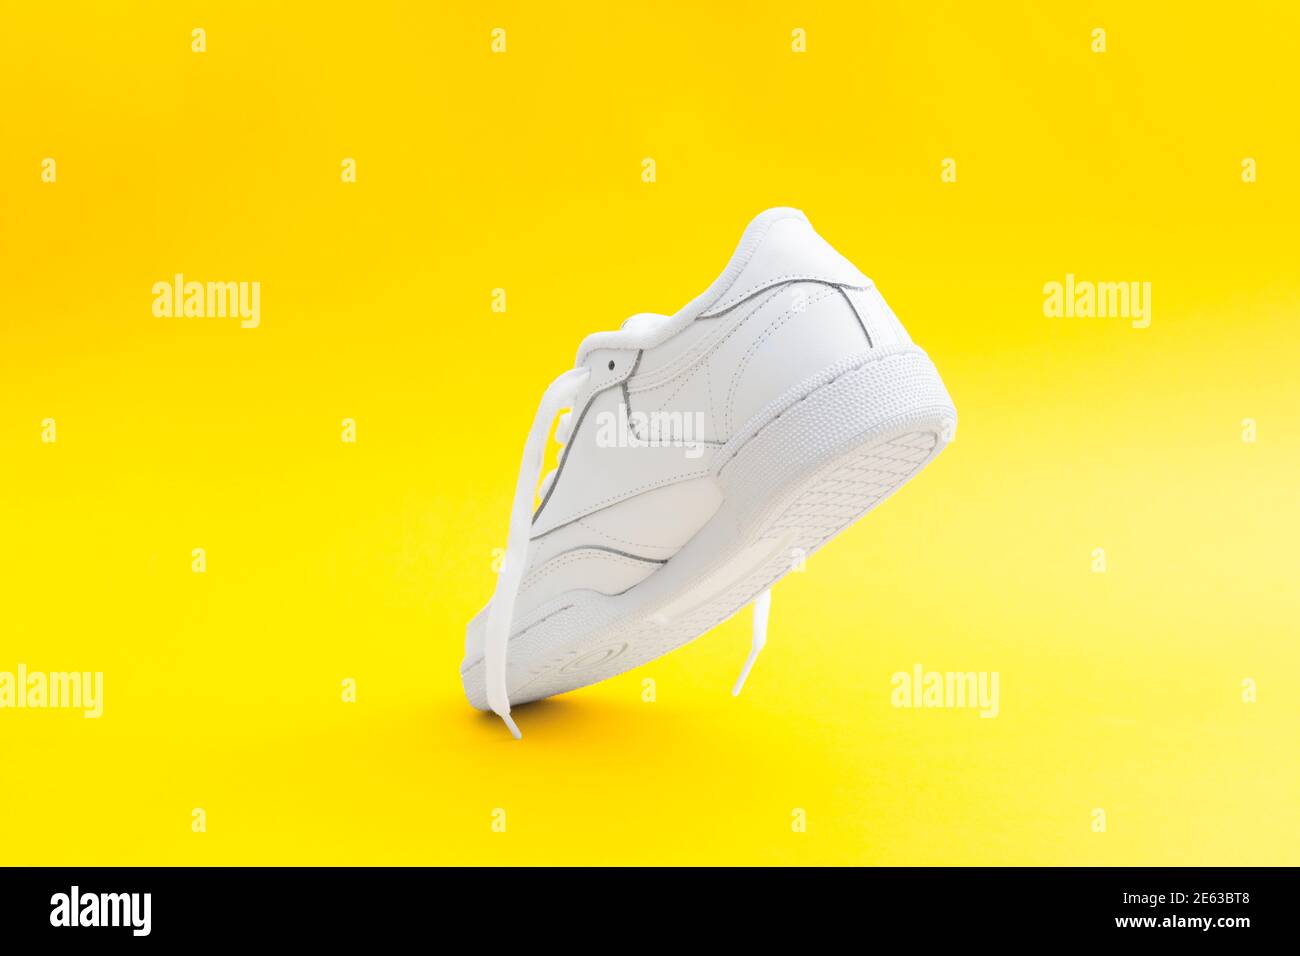 Women's stylish white sneaker on yellow background Heel counter of sport shoe Stock Photo